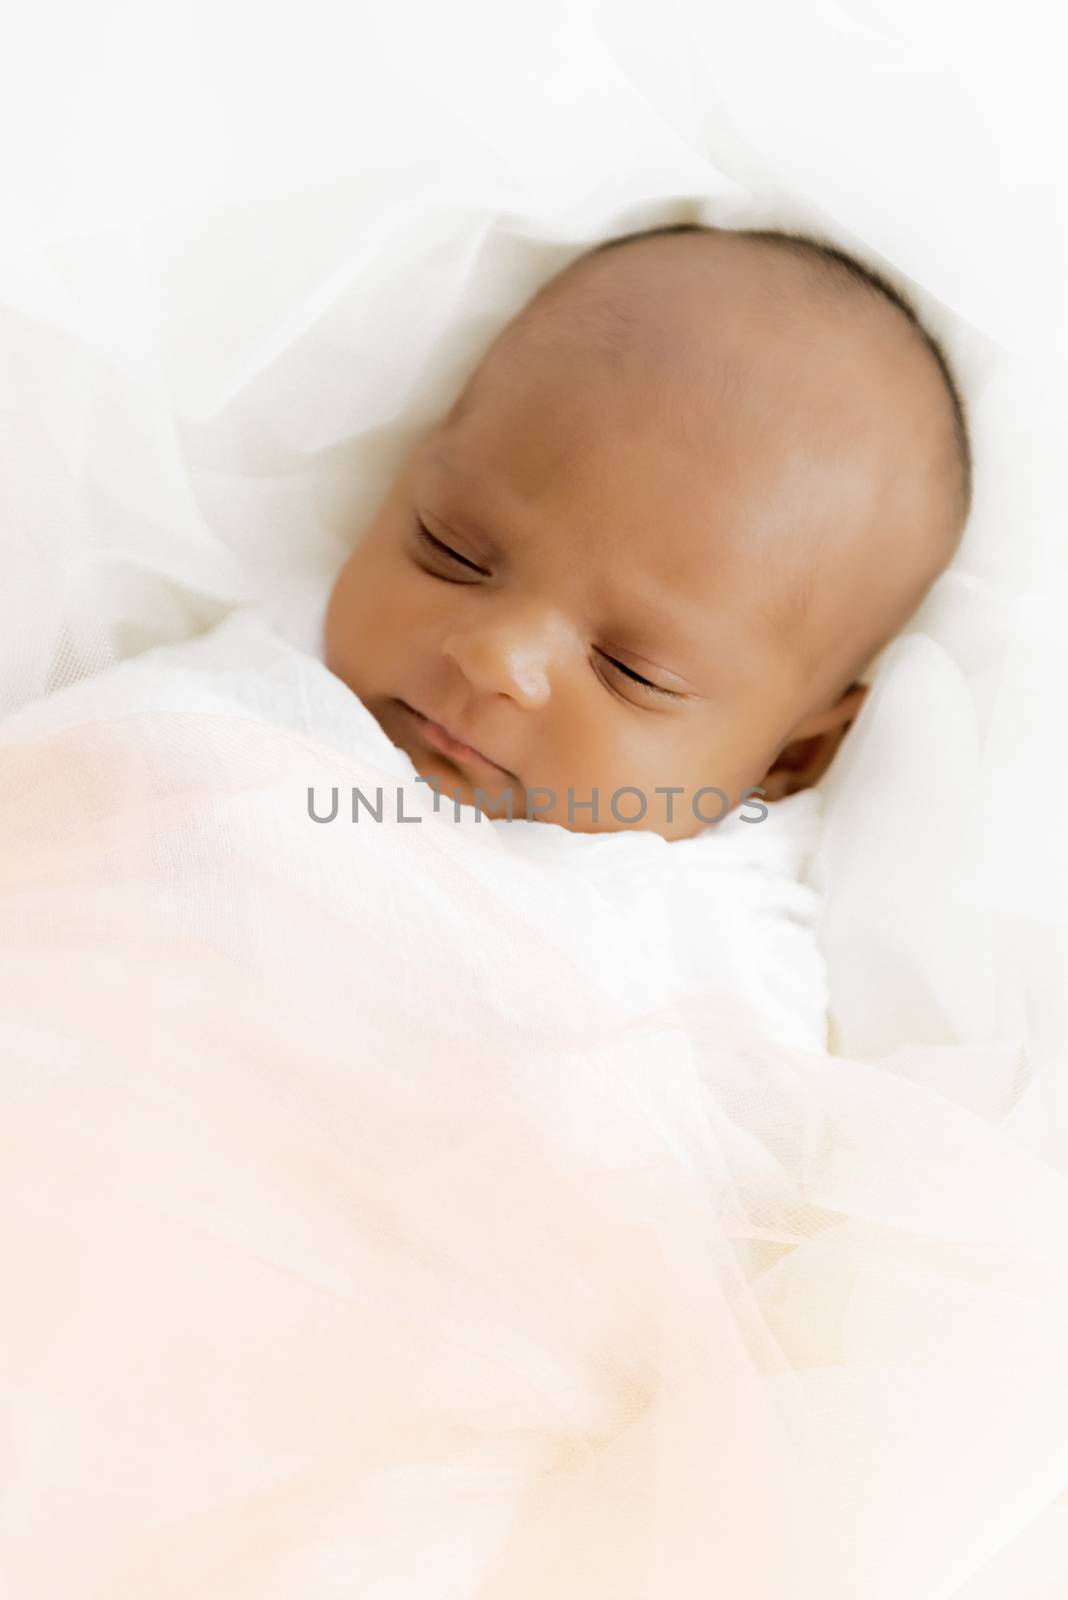 Three weeks old baby sleeping on white blanket cute infant newborn lying down close up shot eyes closed by Altinosmanaj